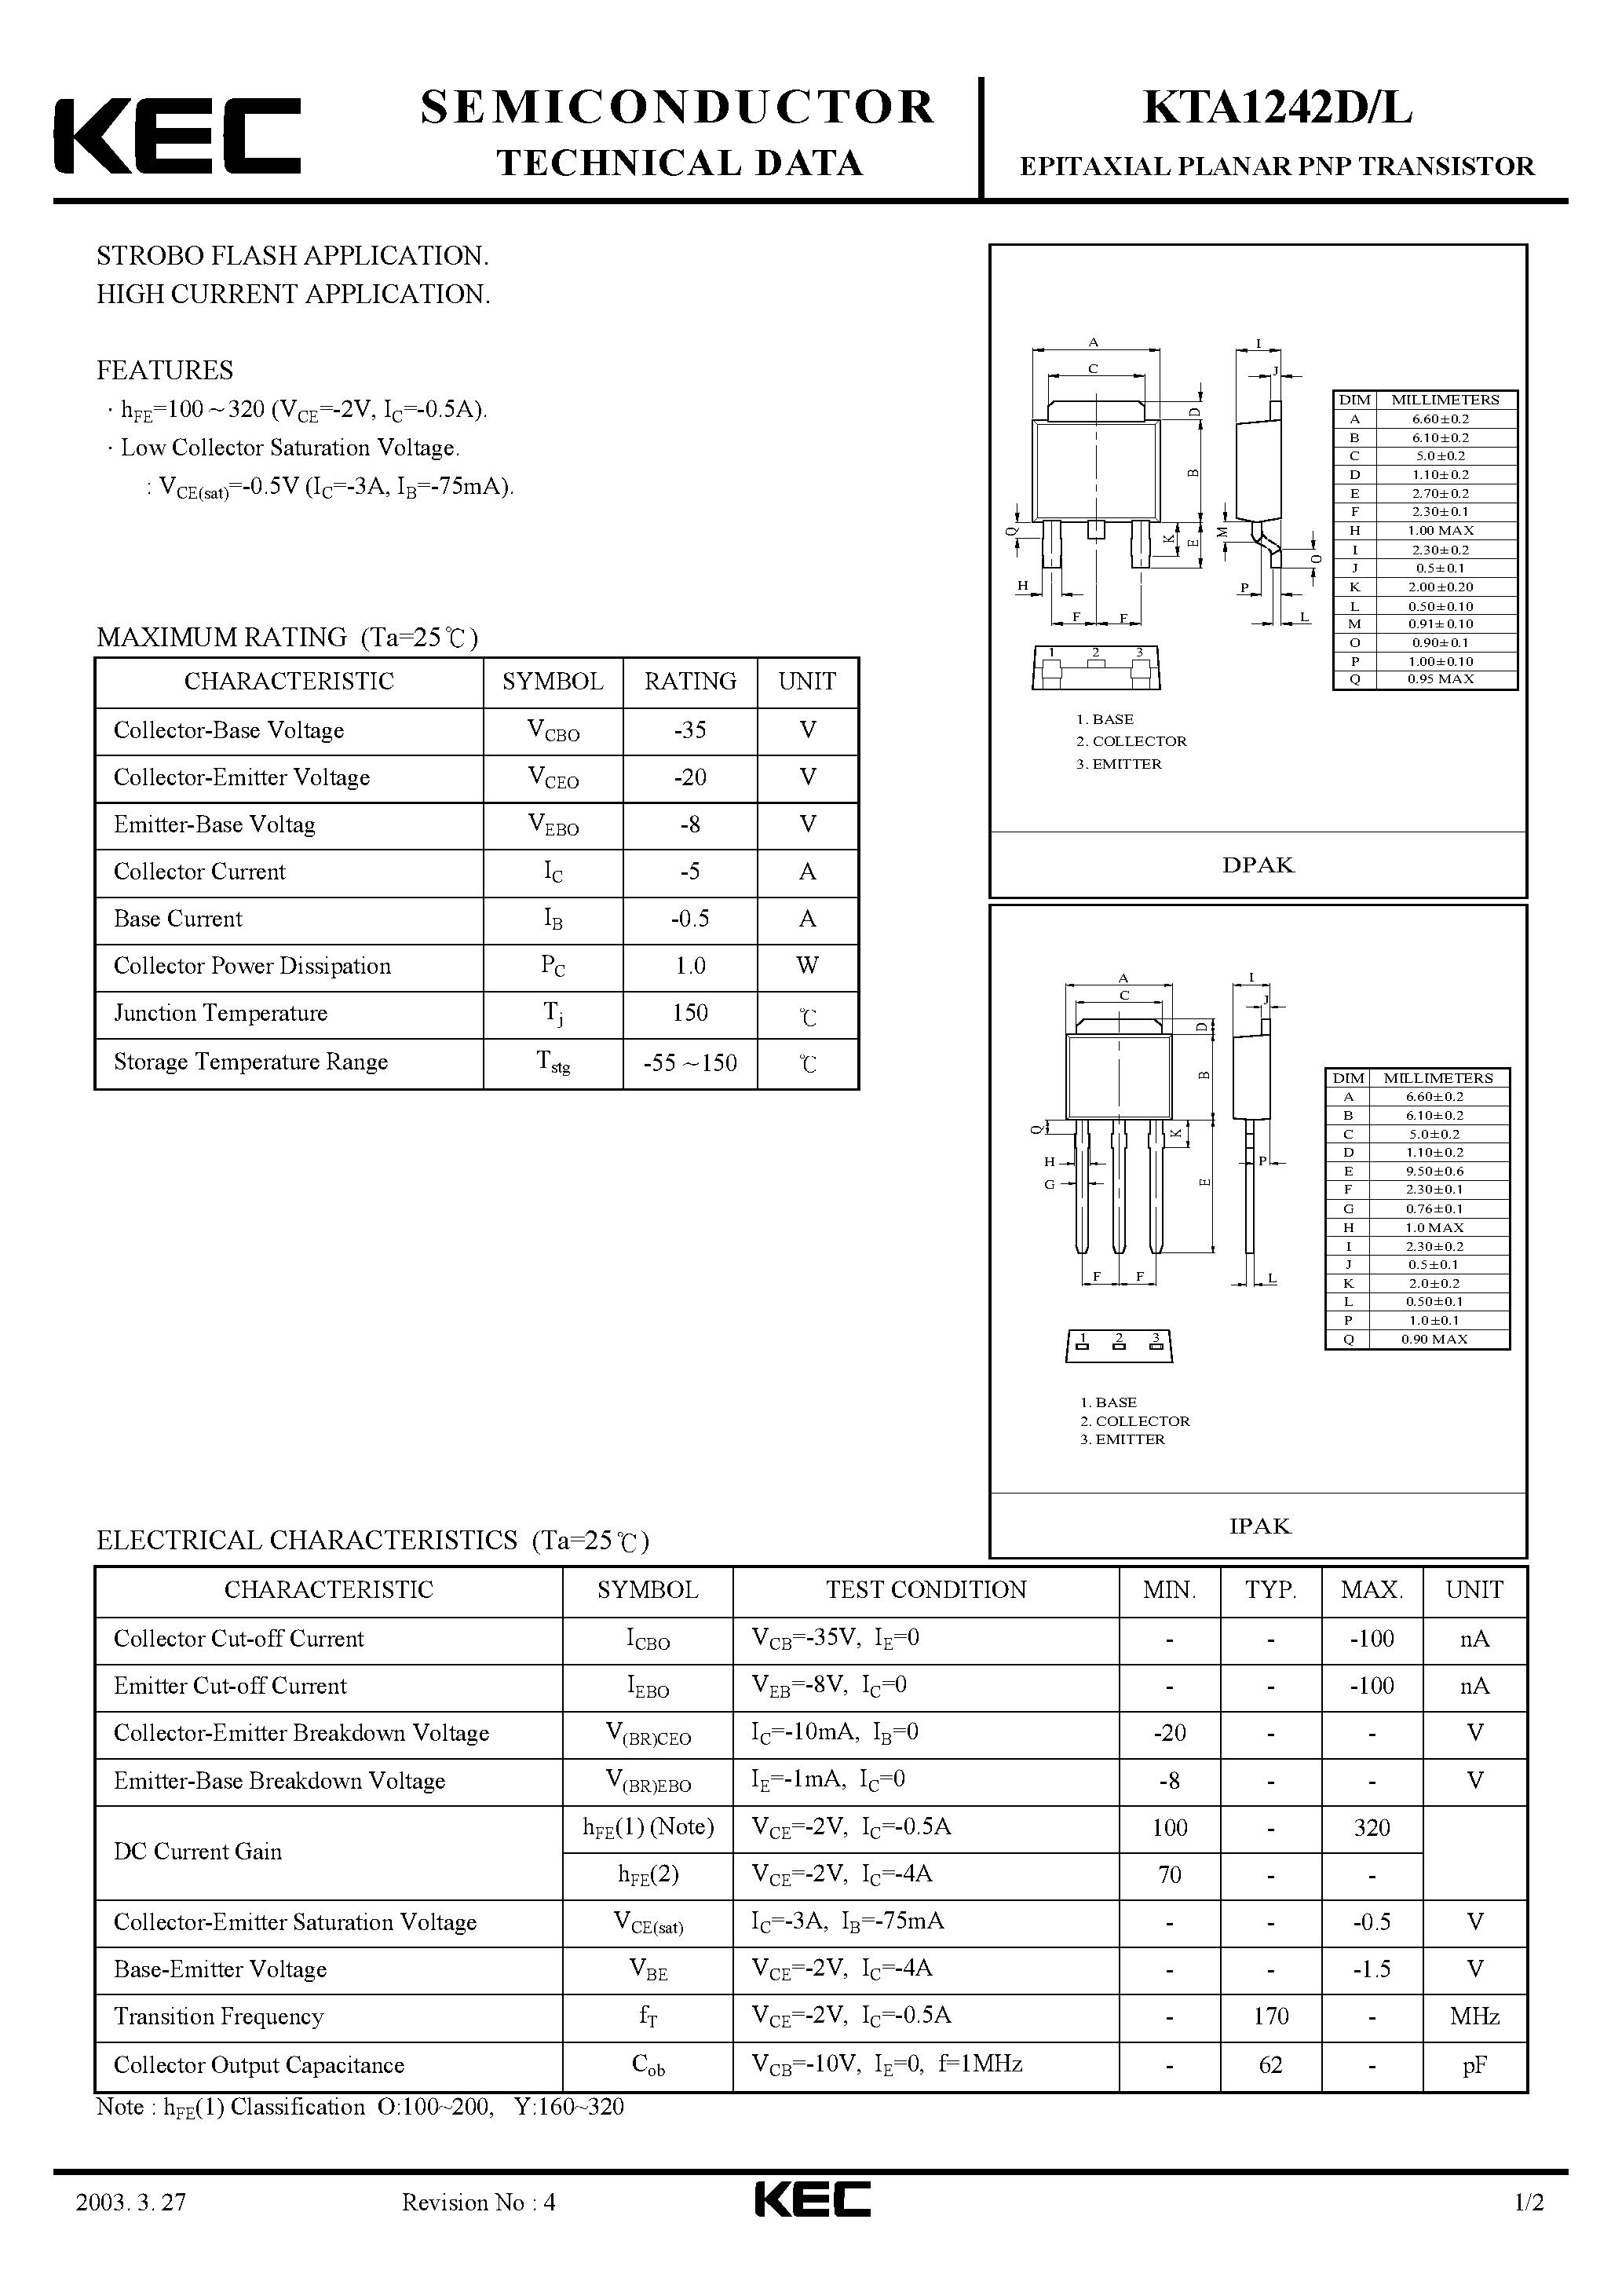 Даташит KTA1242 - EPITAXIAL PLANAR PNP TRANSISTOR (STROBO FLASH/ HIGH CURRENT) страница 1